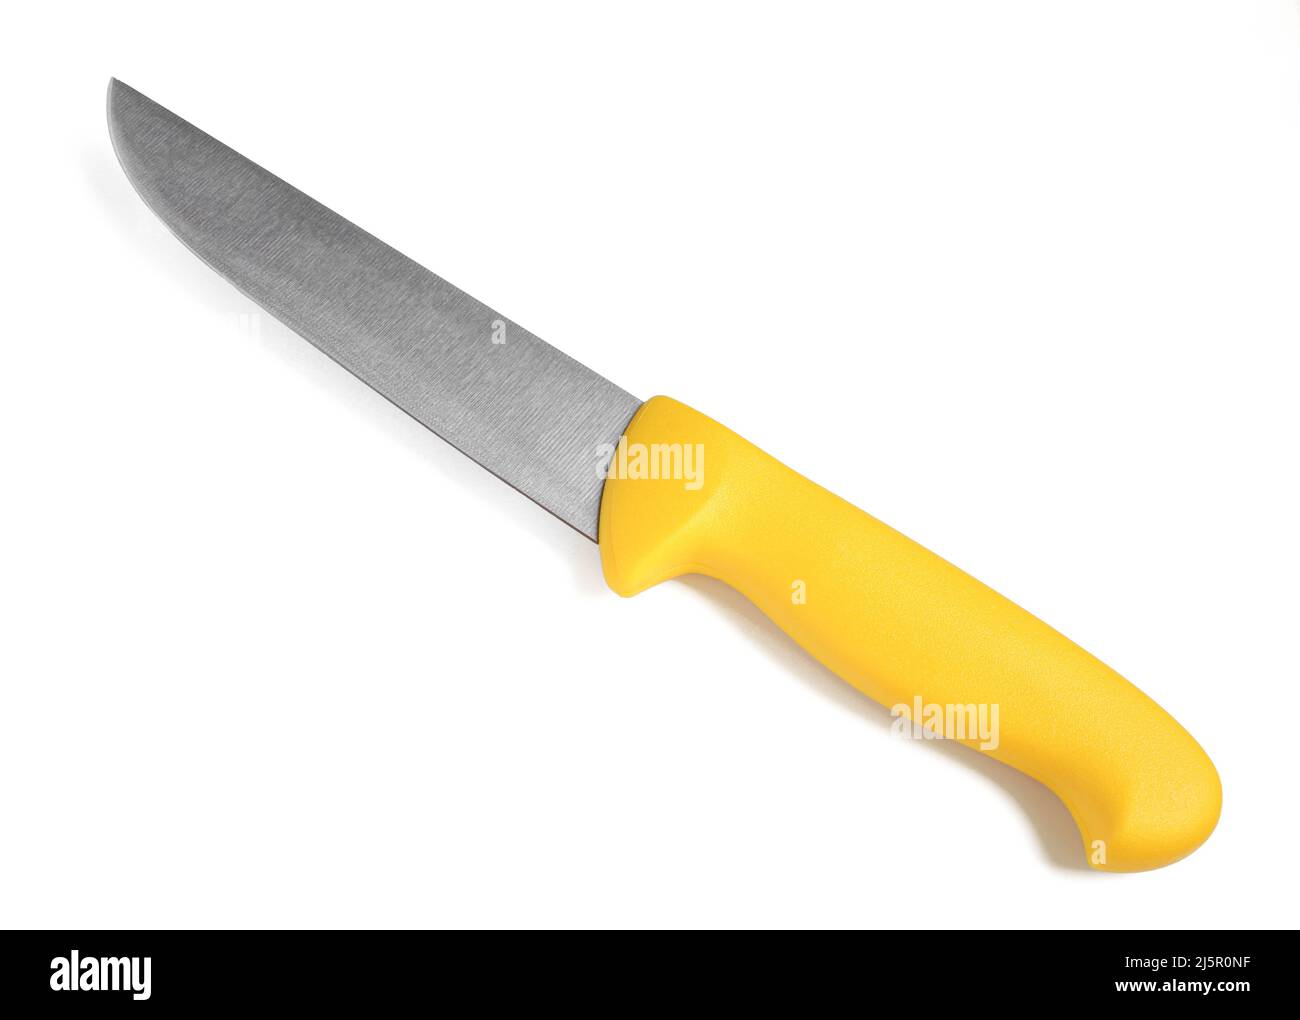 Sharp metallic knife with plastic yellow handle isolated on white background Stock Photo